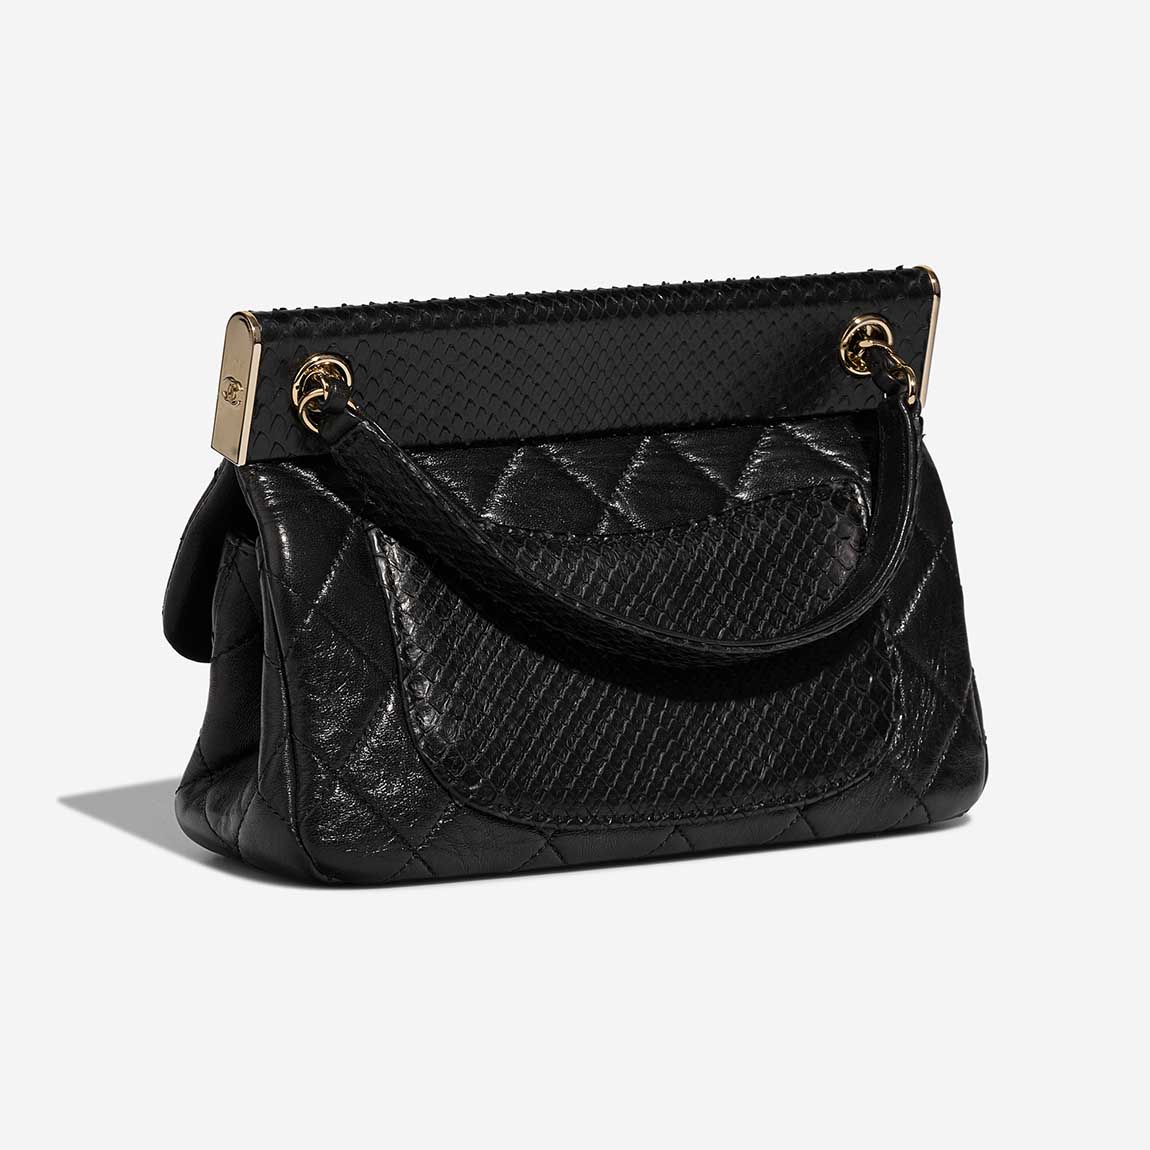 Chanel Timeless Small Aged Calf / Python Black | Sell your designer bag